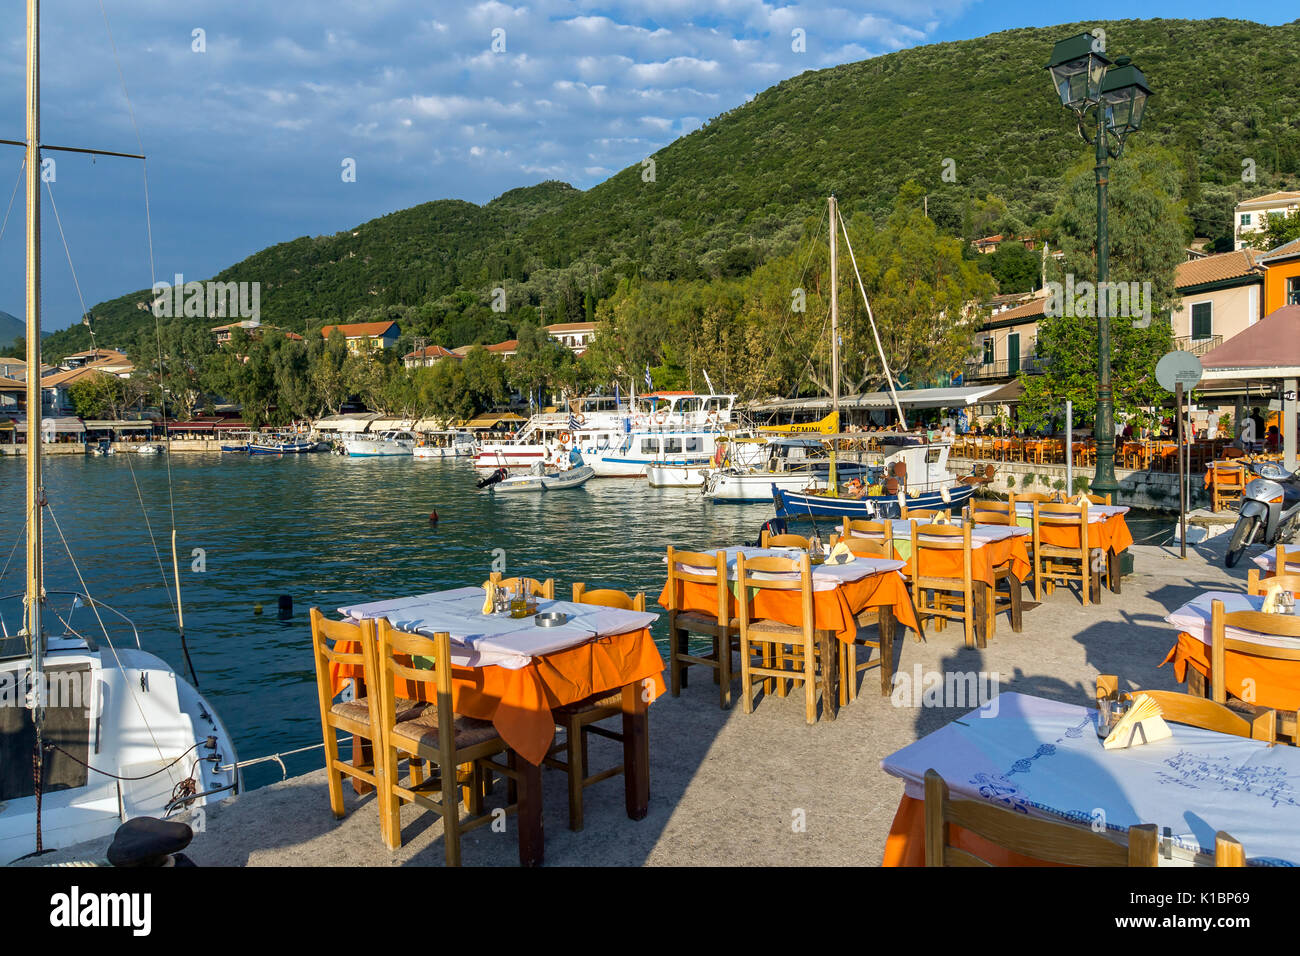 Vasiliki, Lefkada, Ionian Islands, Greece Stock Photo - Alamy